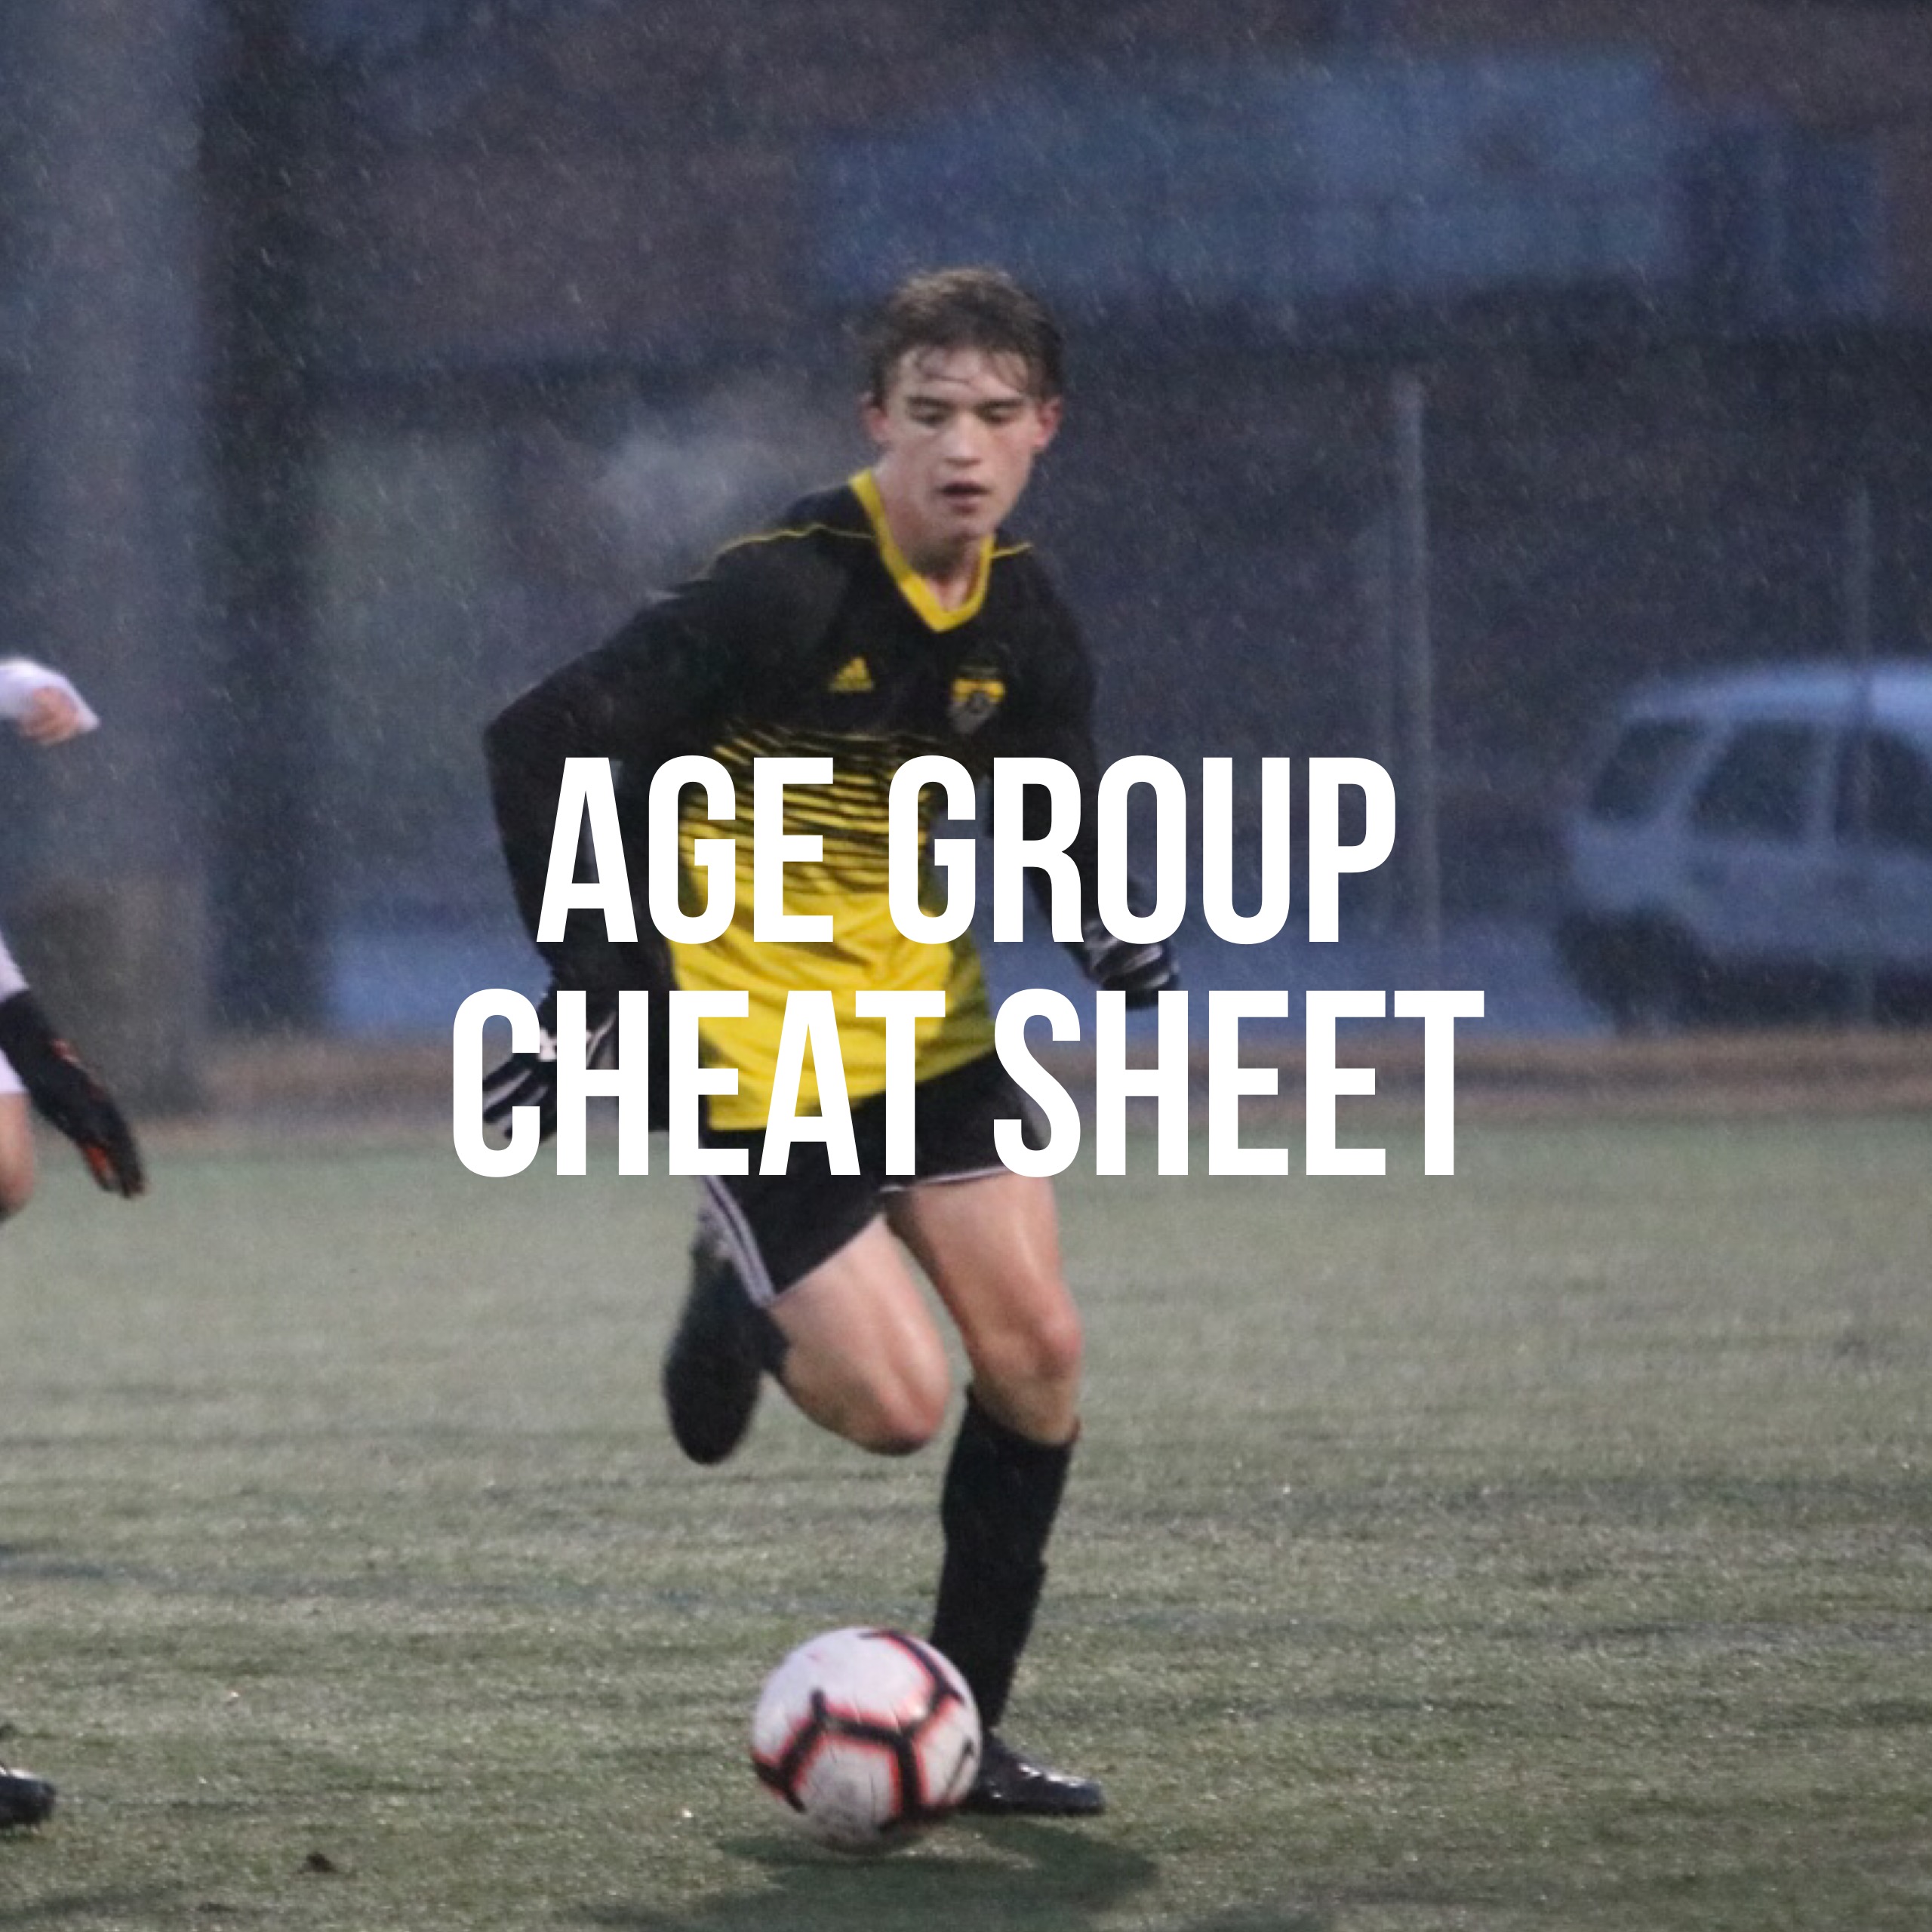 Age Group Cheat Sheet